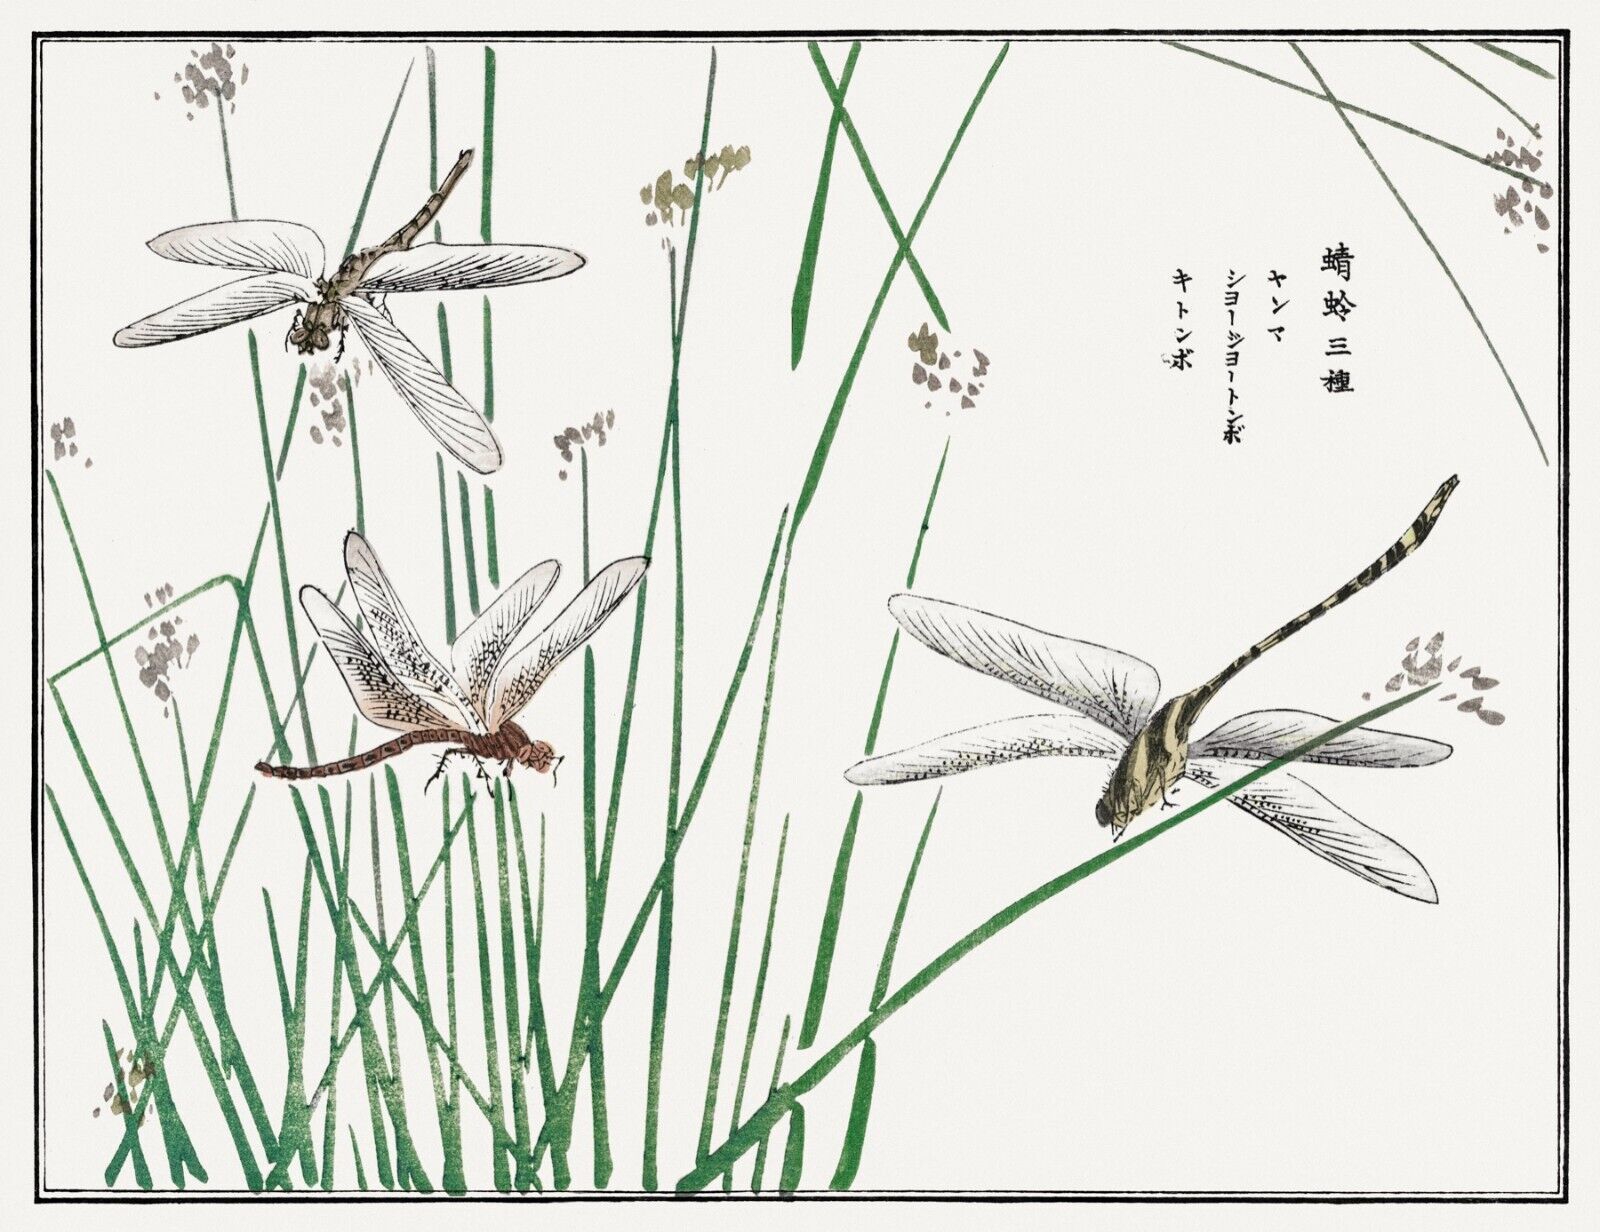 10065.Decor Poster.Room home wall.1910 Japan print.Morimoto Toko art.Dragonflies